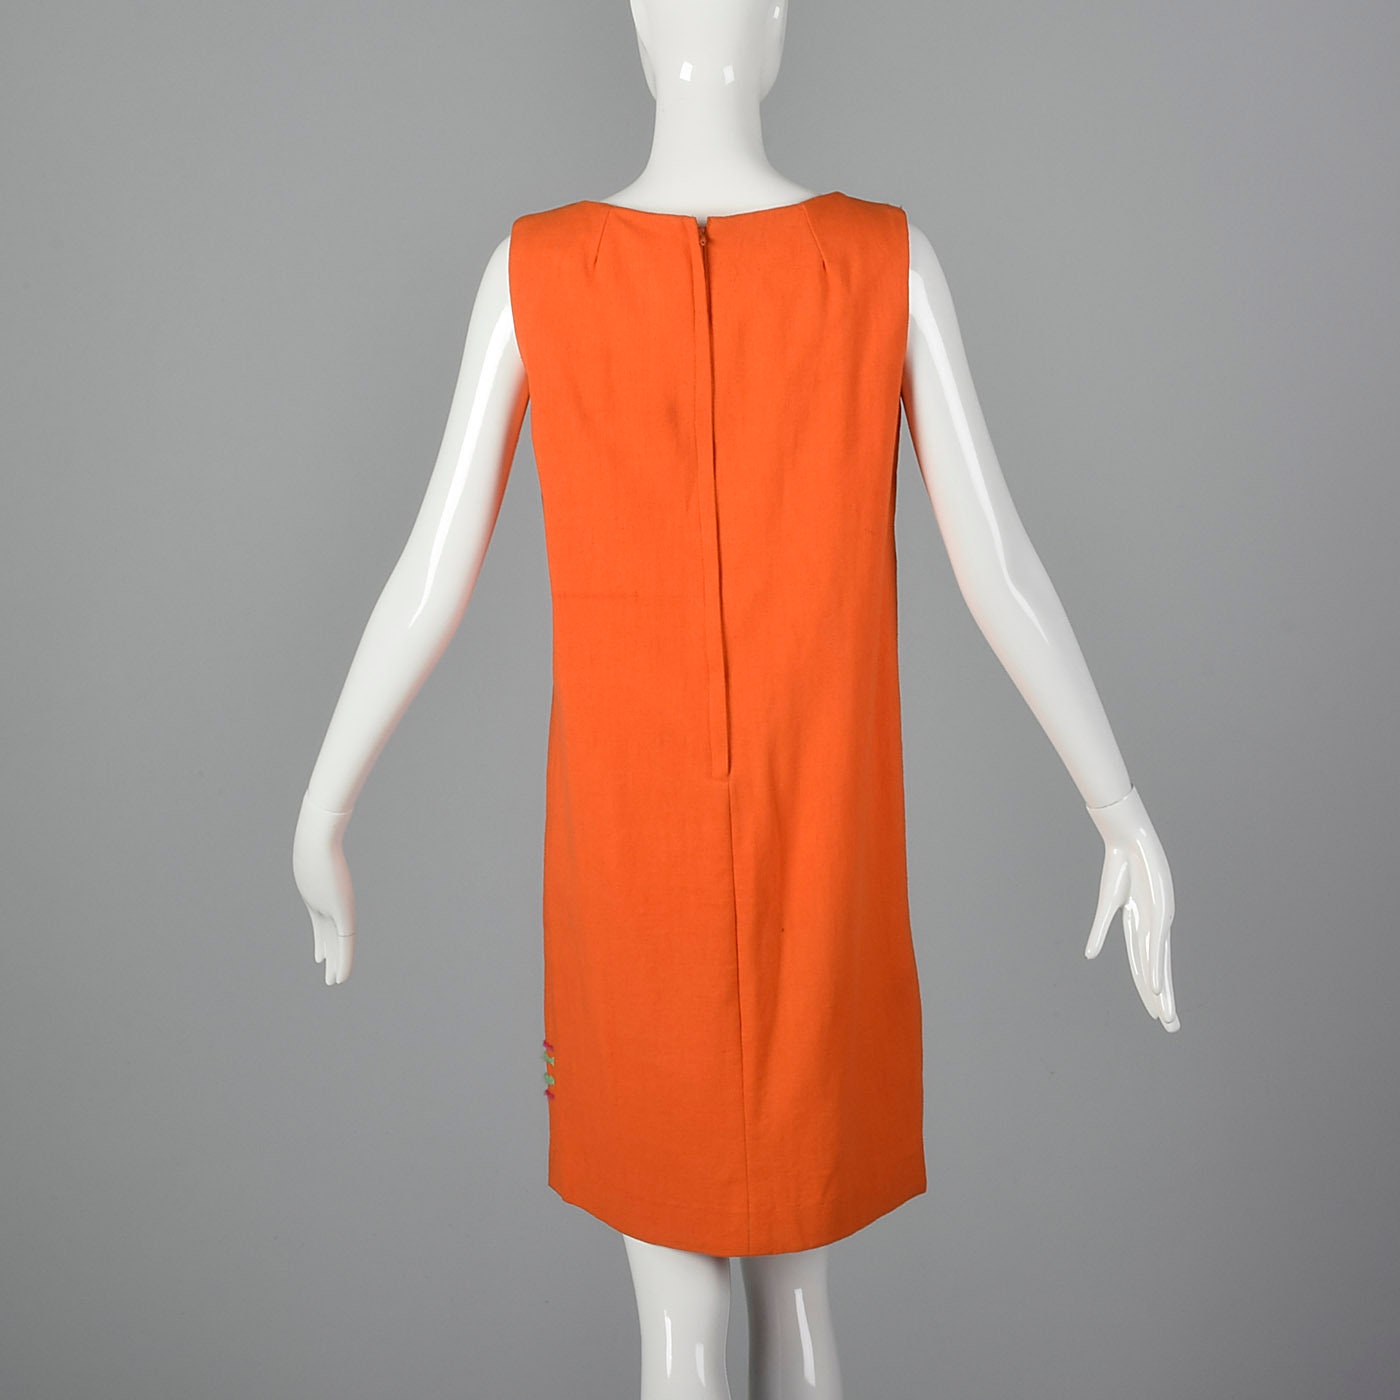 Medium 1960s Novelty Dress Orange Sleeveless Shift Dress Yarn Applique ...